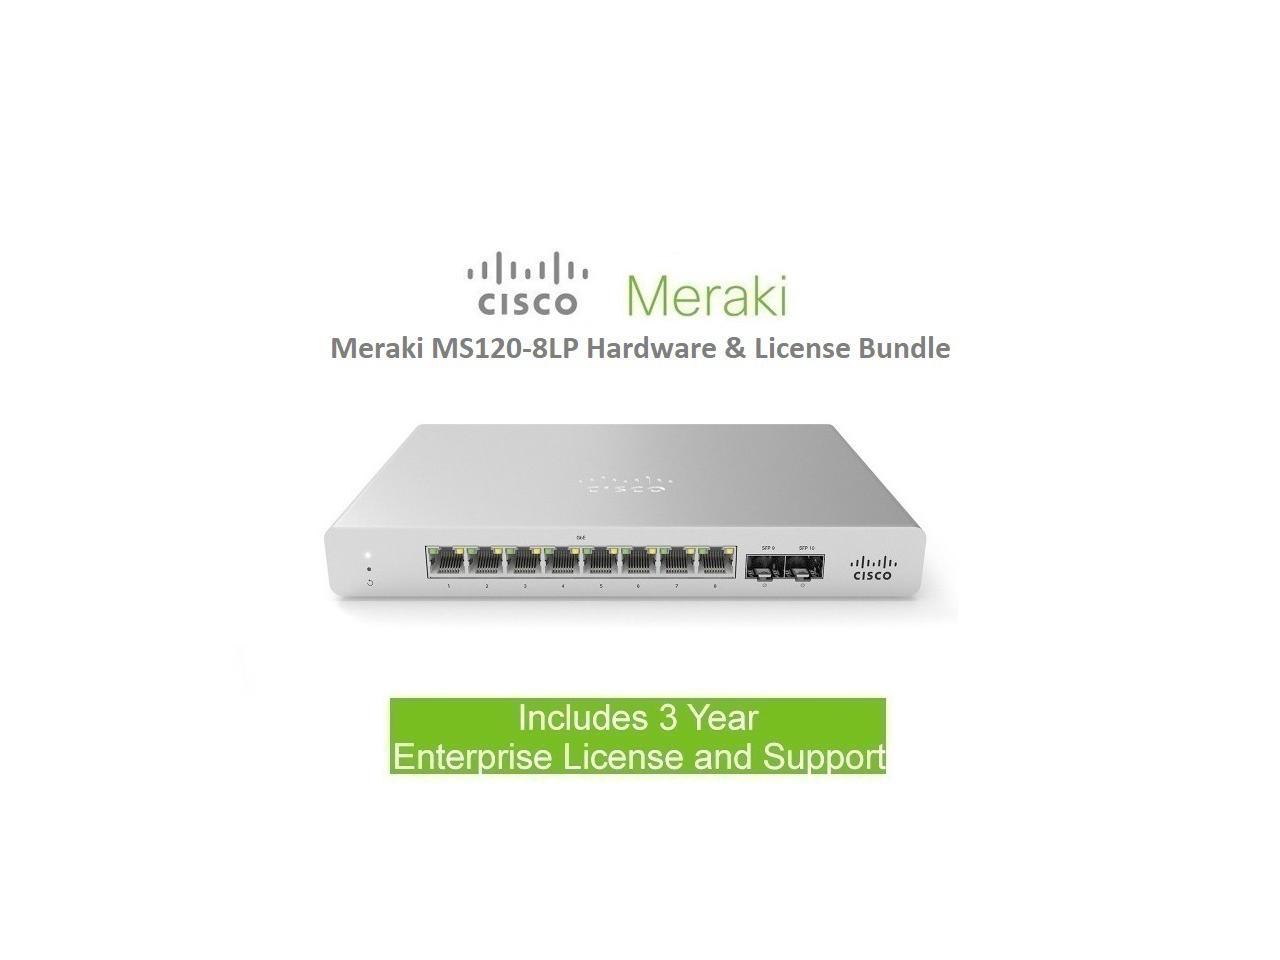 Cisco Meraki MS120-8LP 8 Port Gigabit Switch Includes 3 Year Enterprise License